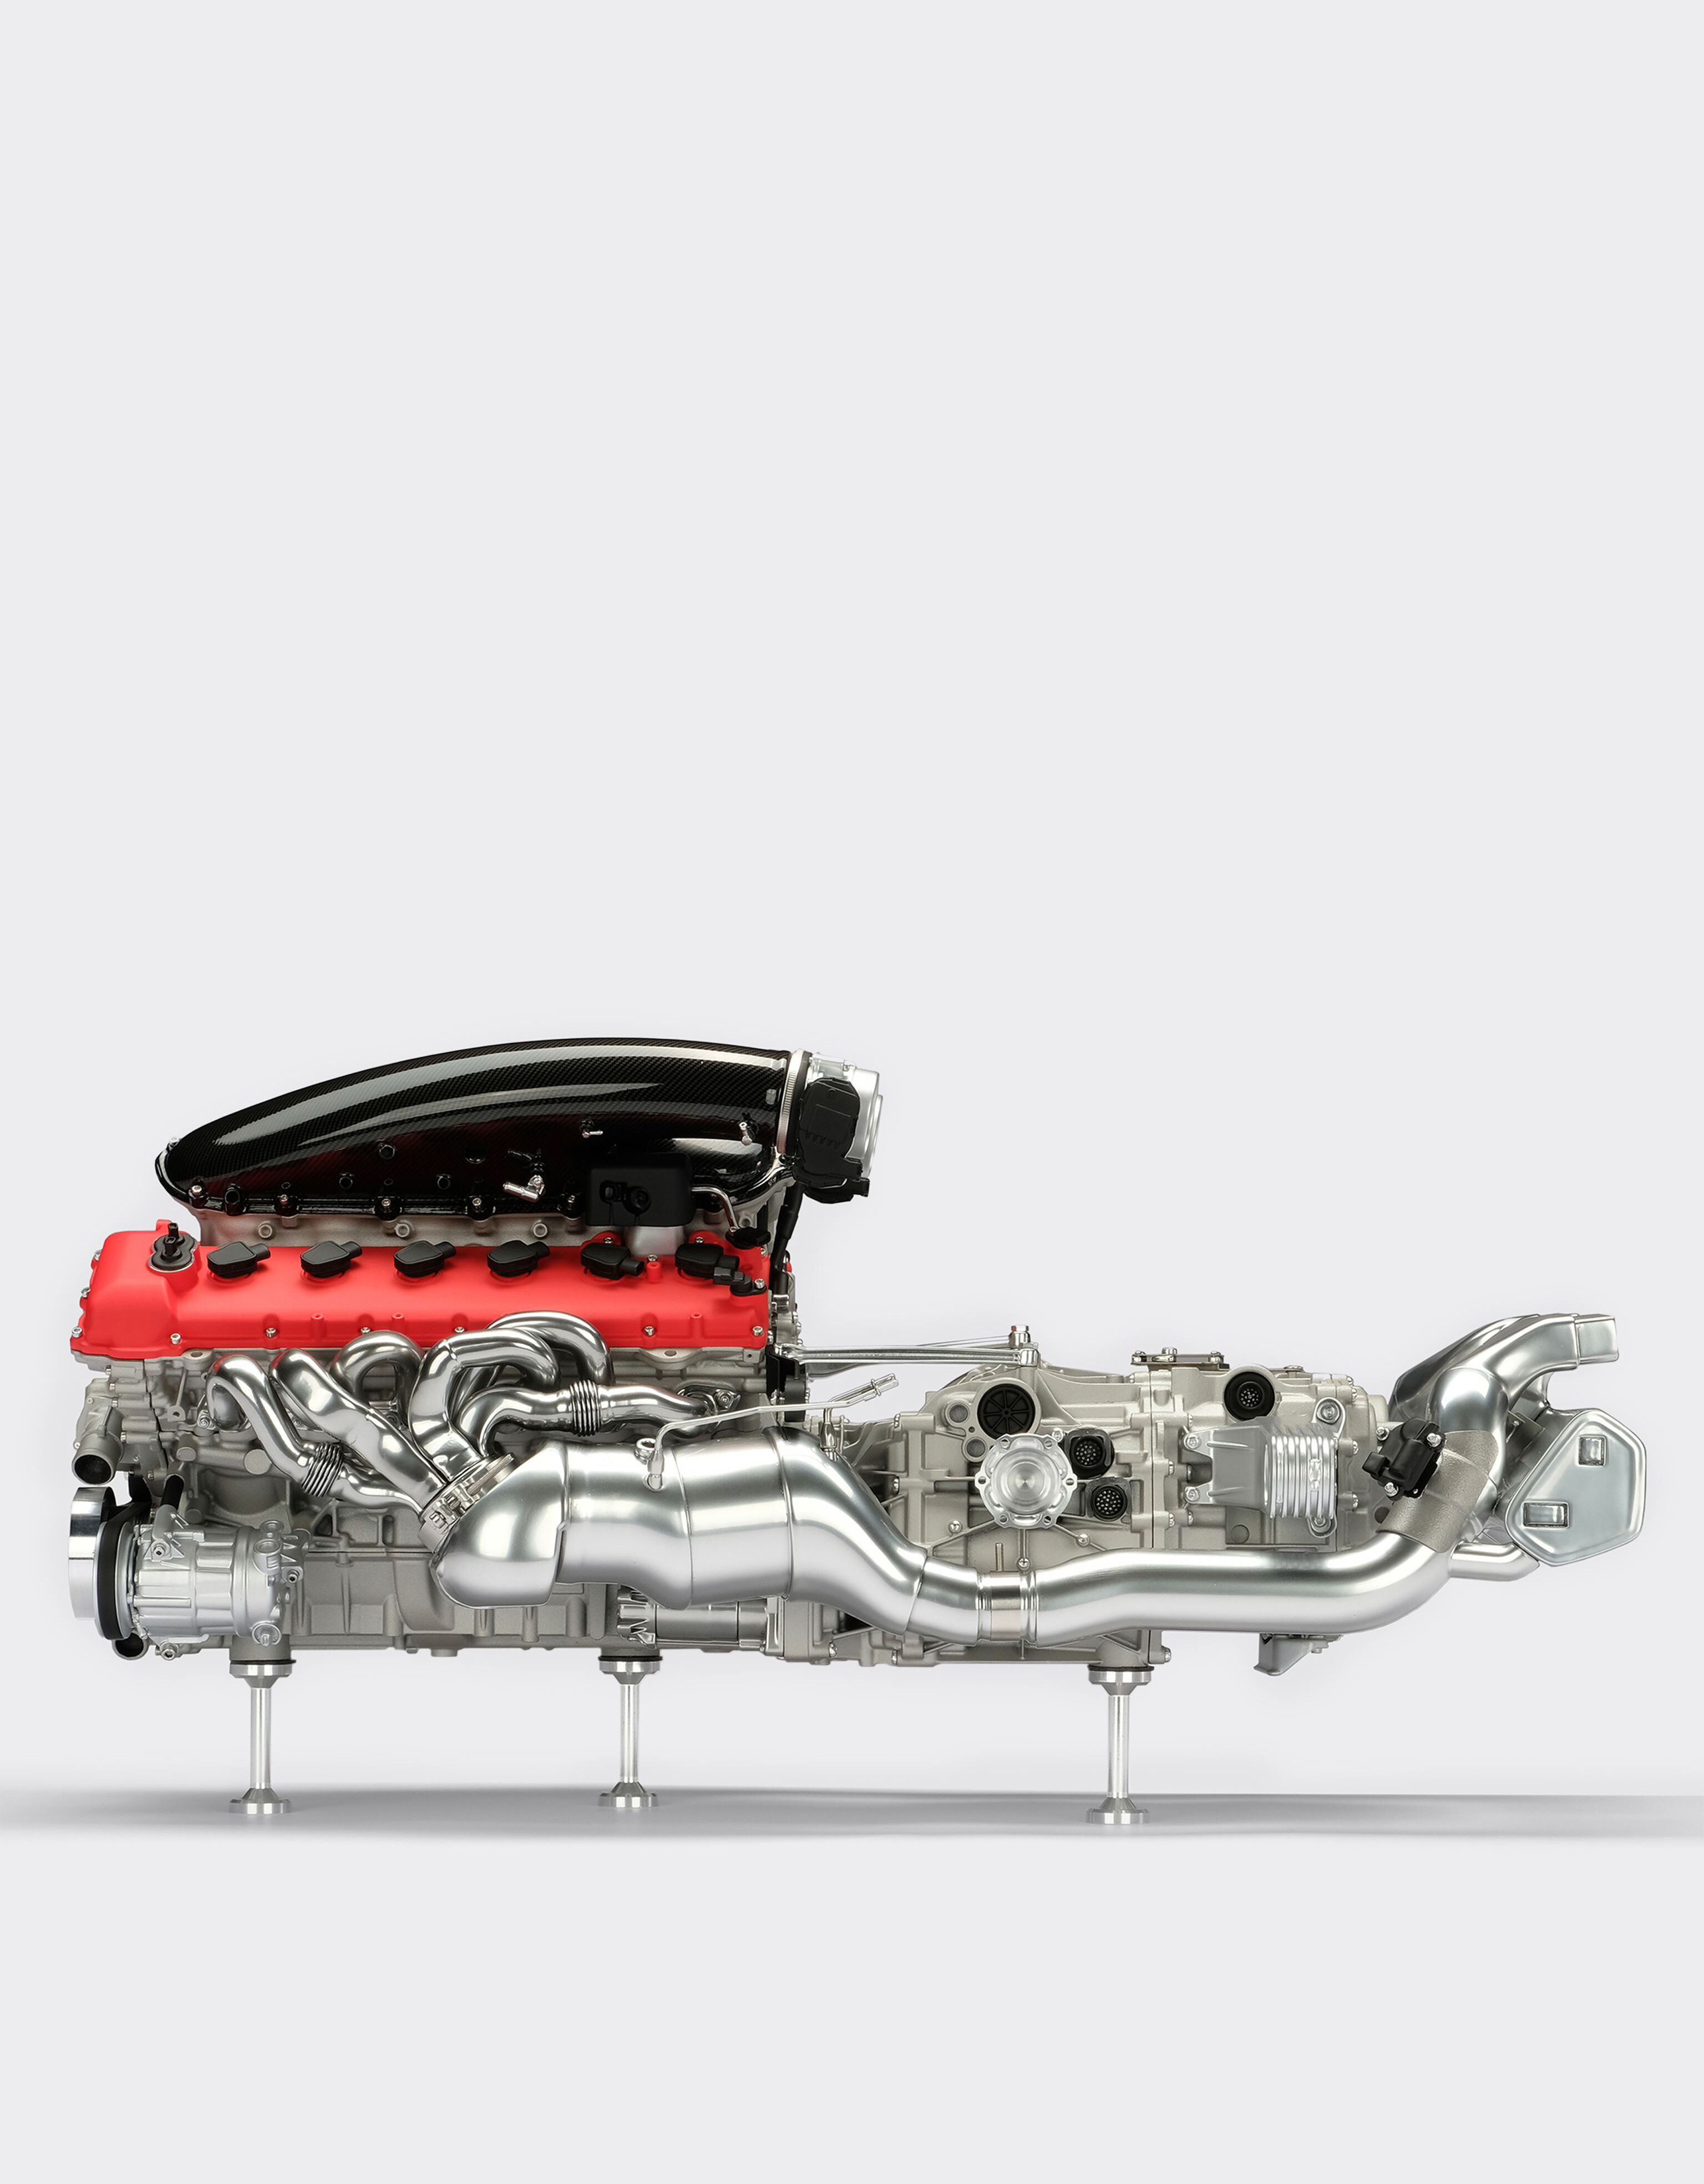 Ferrari Ferrari Daytona SP3 engine model in 1:4 scale MULTICOLOUR F0885f